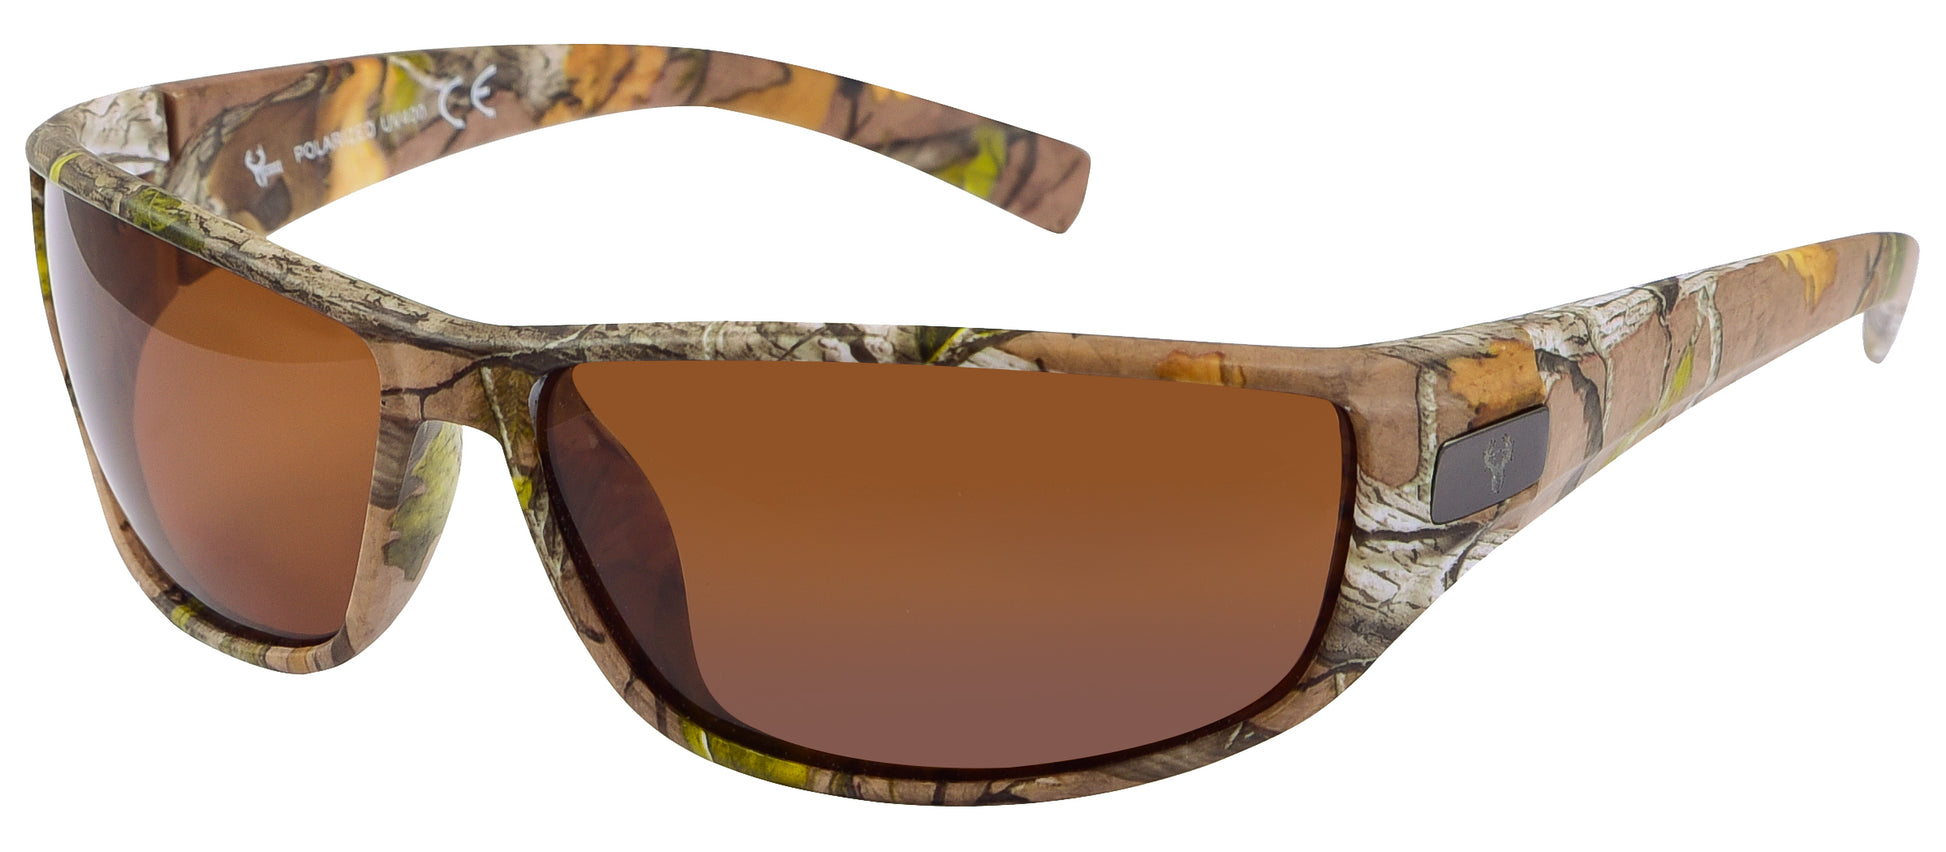 Scierra Polarized Fishing Sunglasses Wrap Around